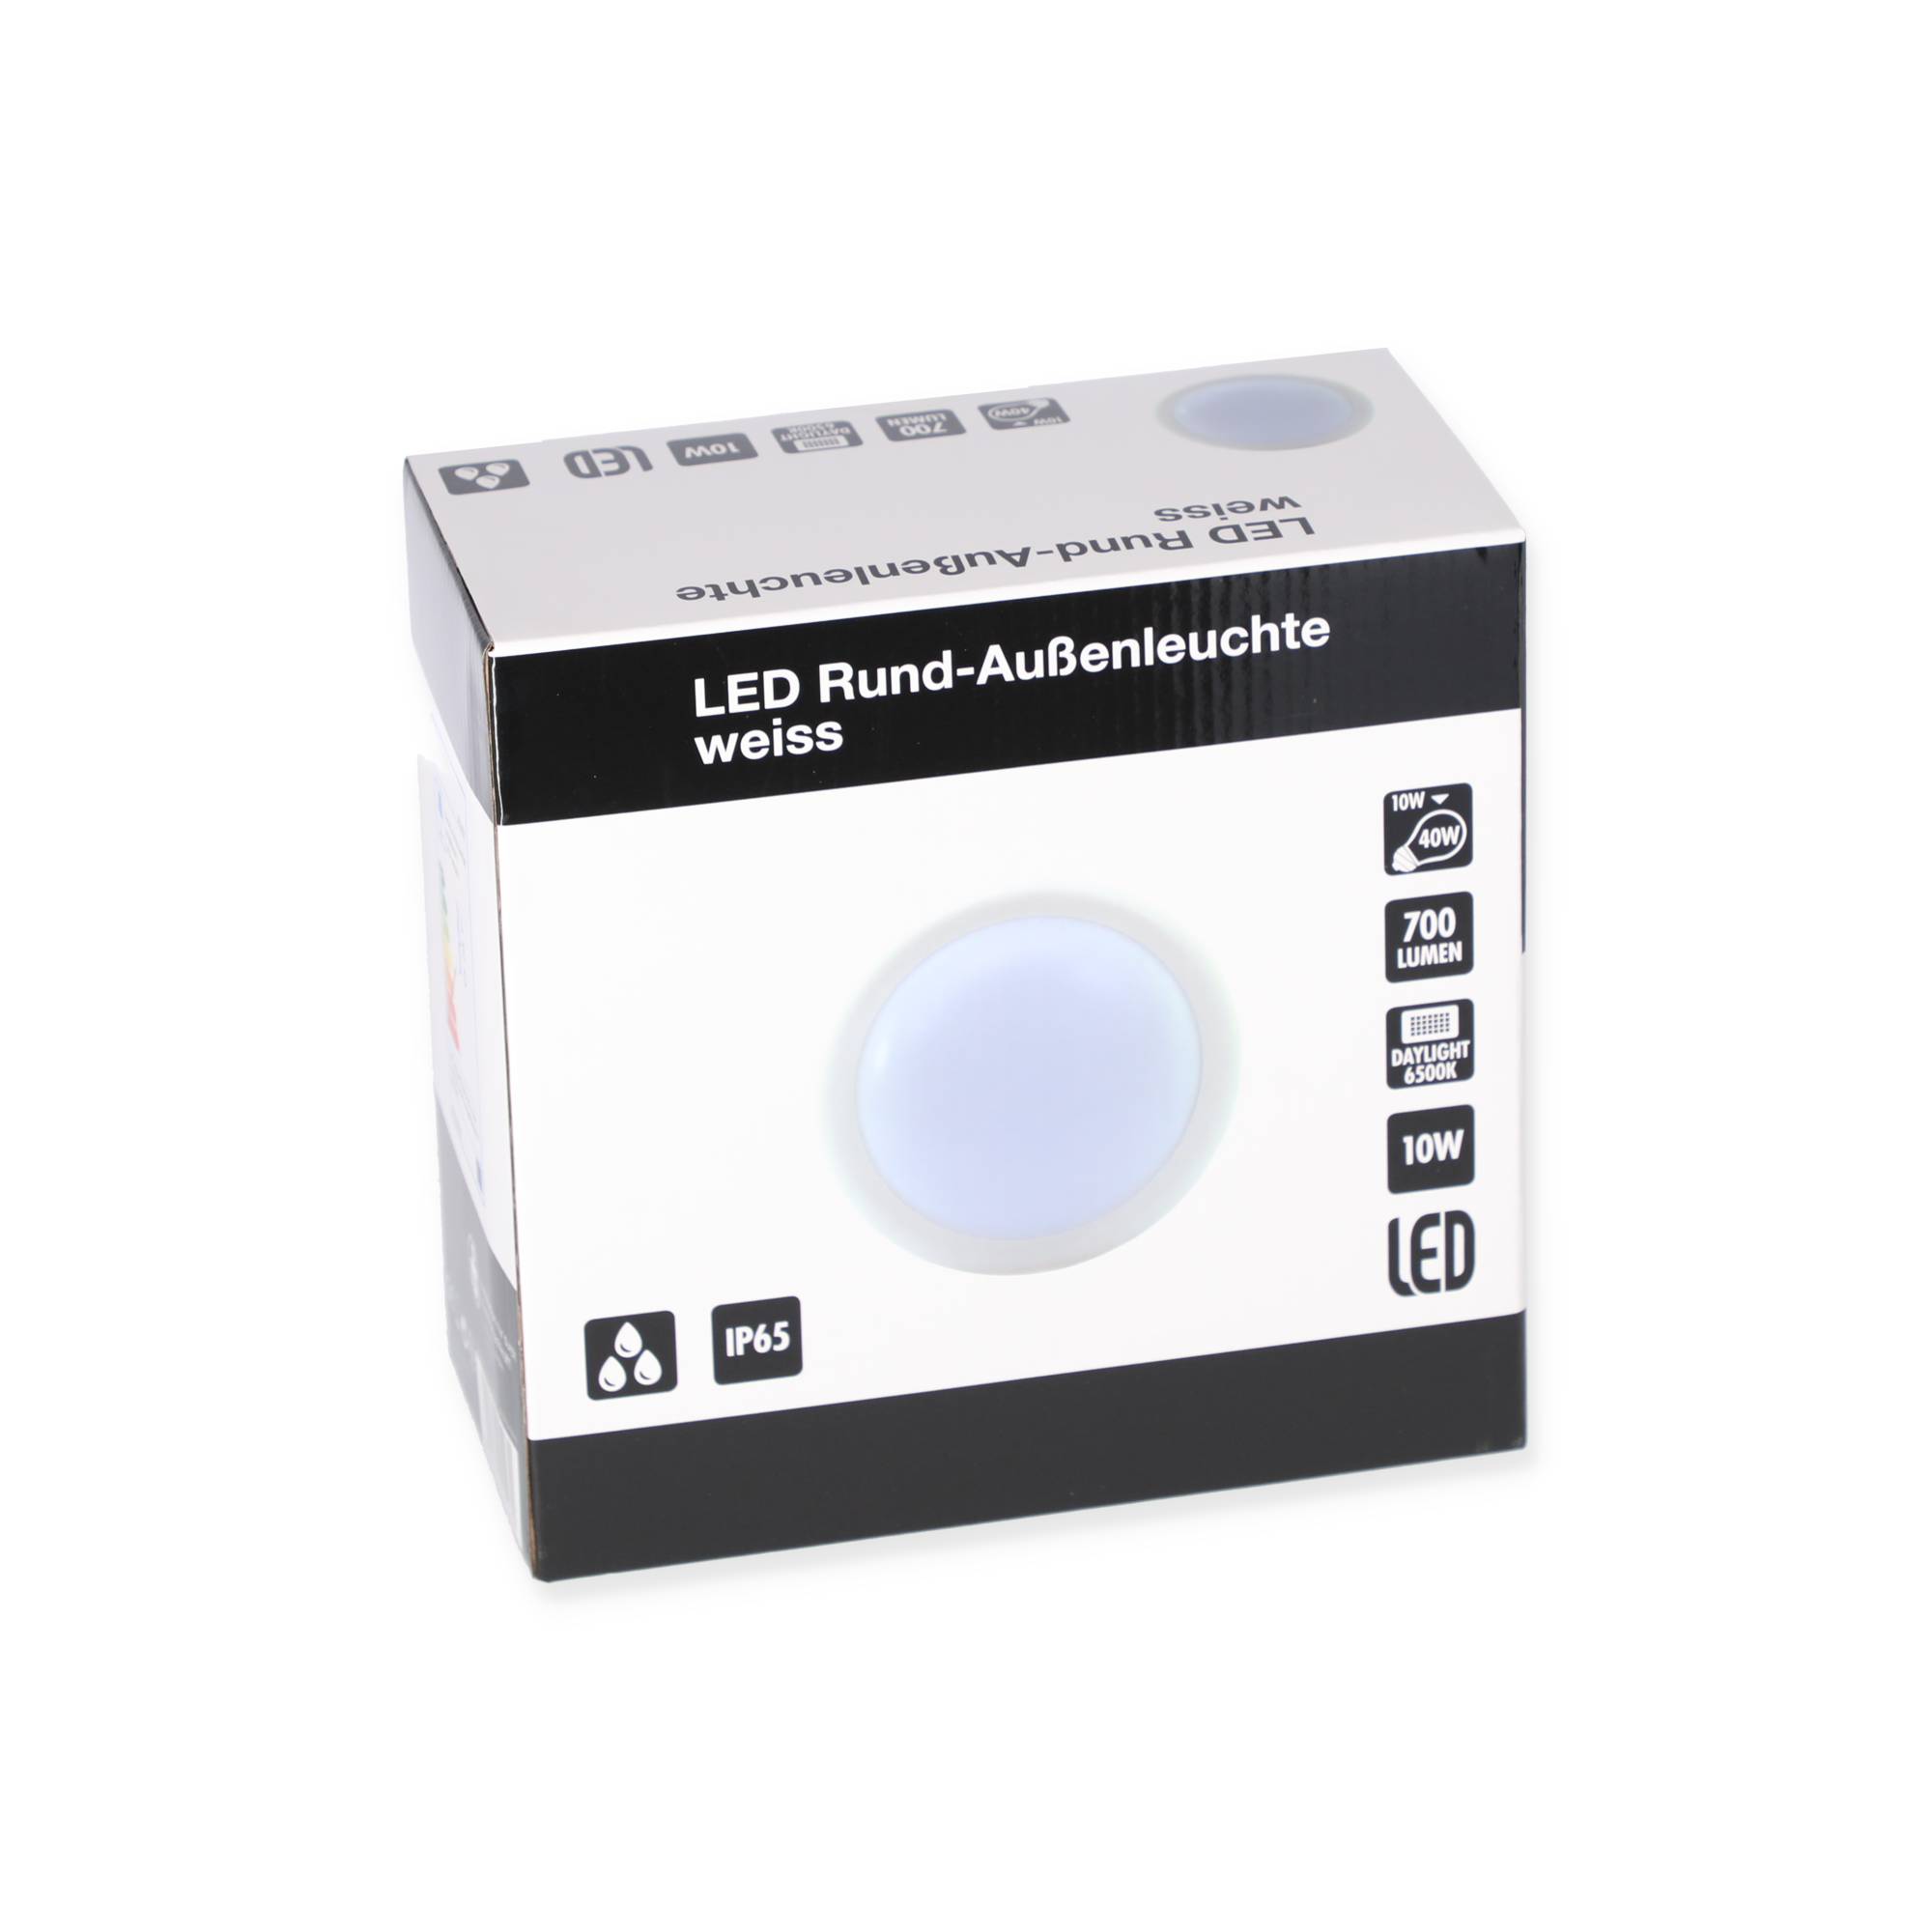 LED-Außenleuchte weiß 10 W 700 lm Ø 19,7 cm + product picture